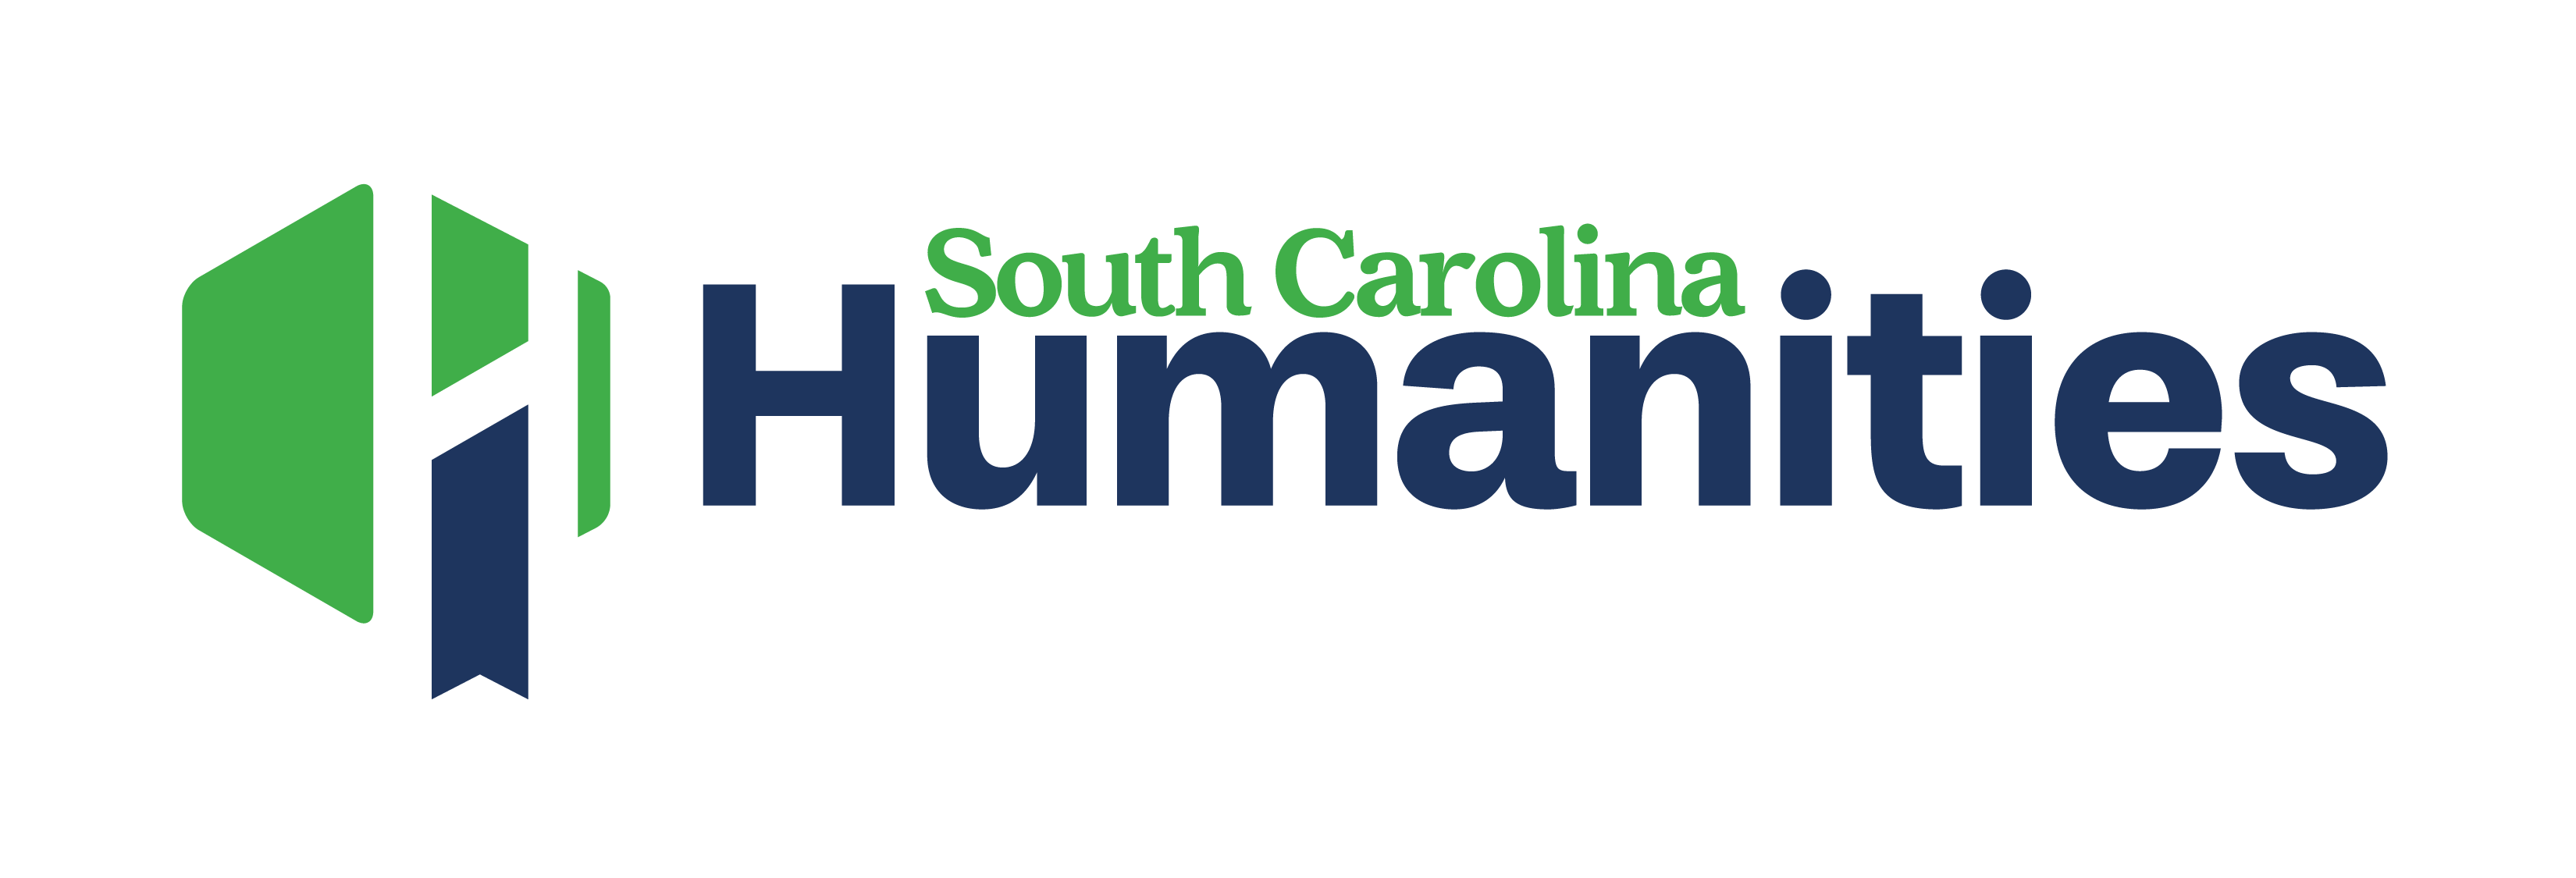 SC Humanities offers literary programming grants